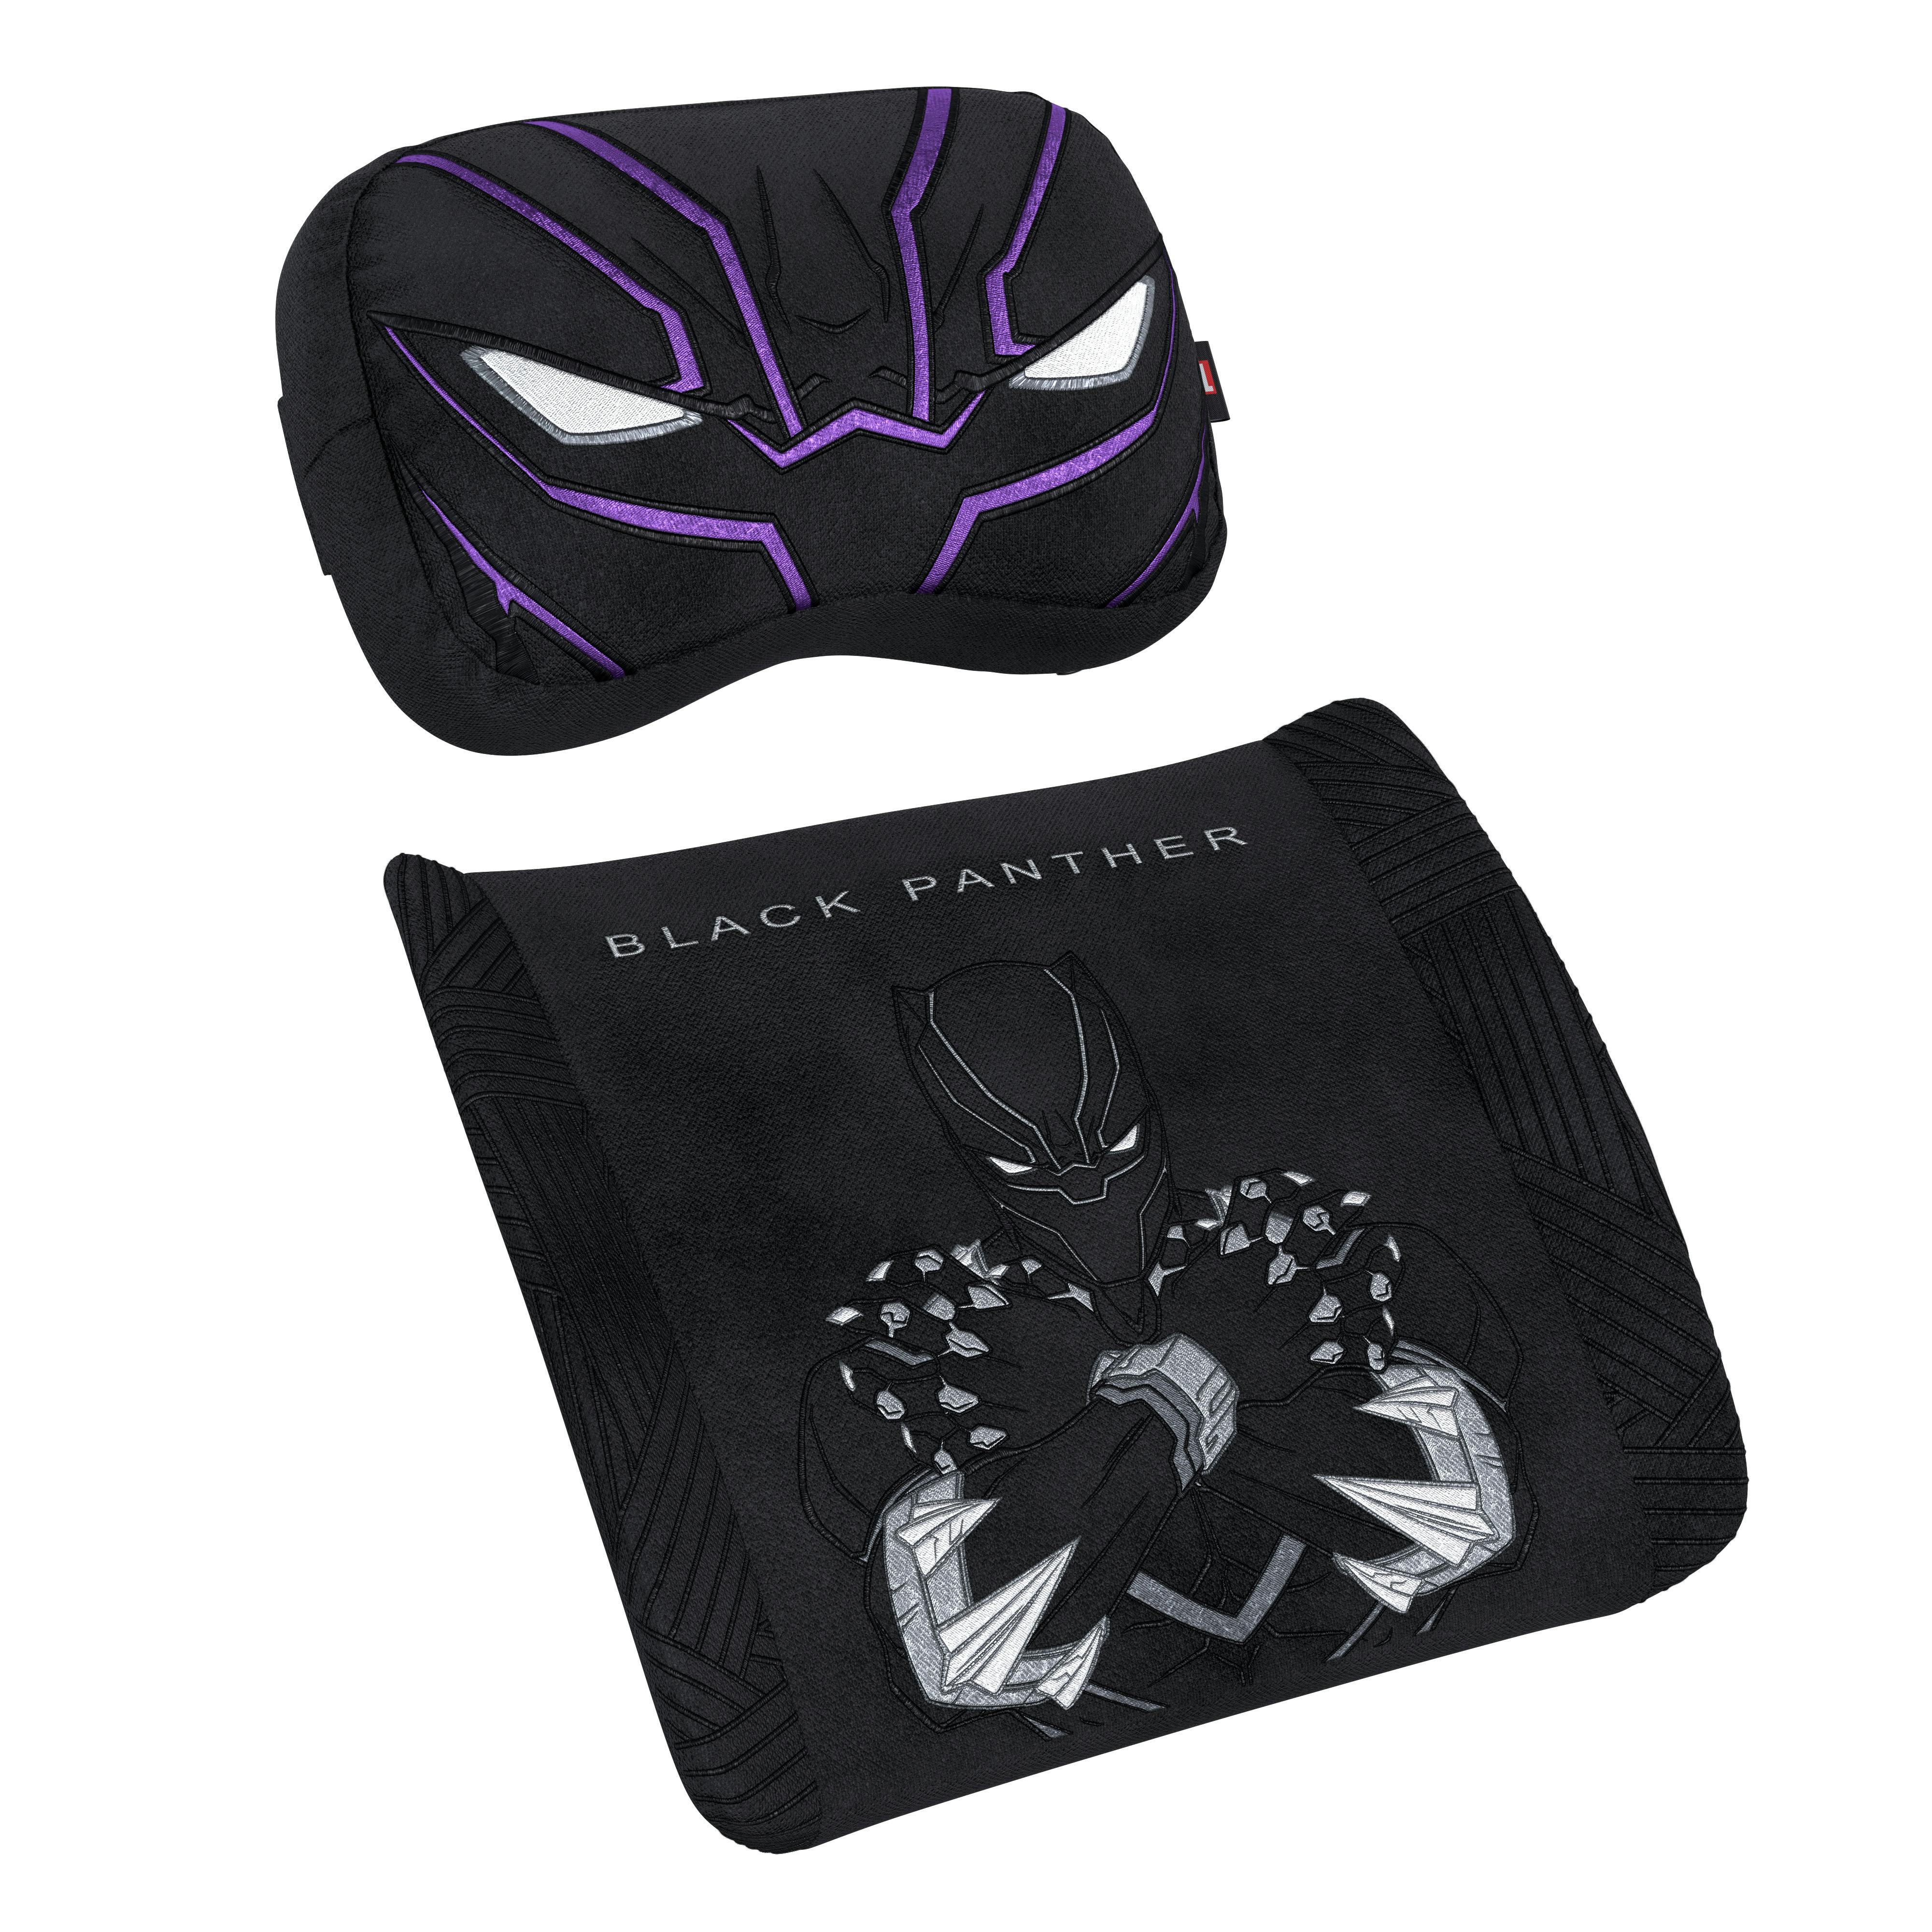 Memory Foam Conjunto de Almofadas - Black Panther Edition